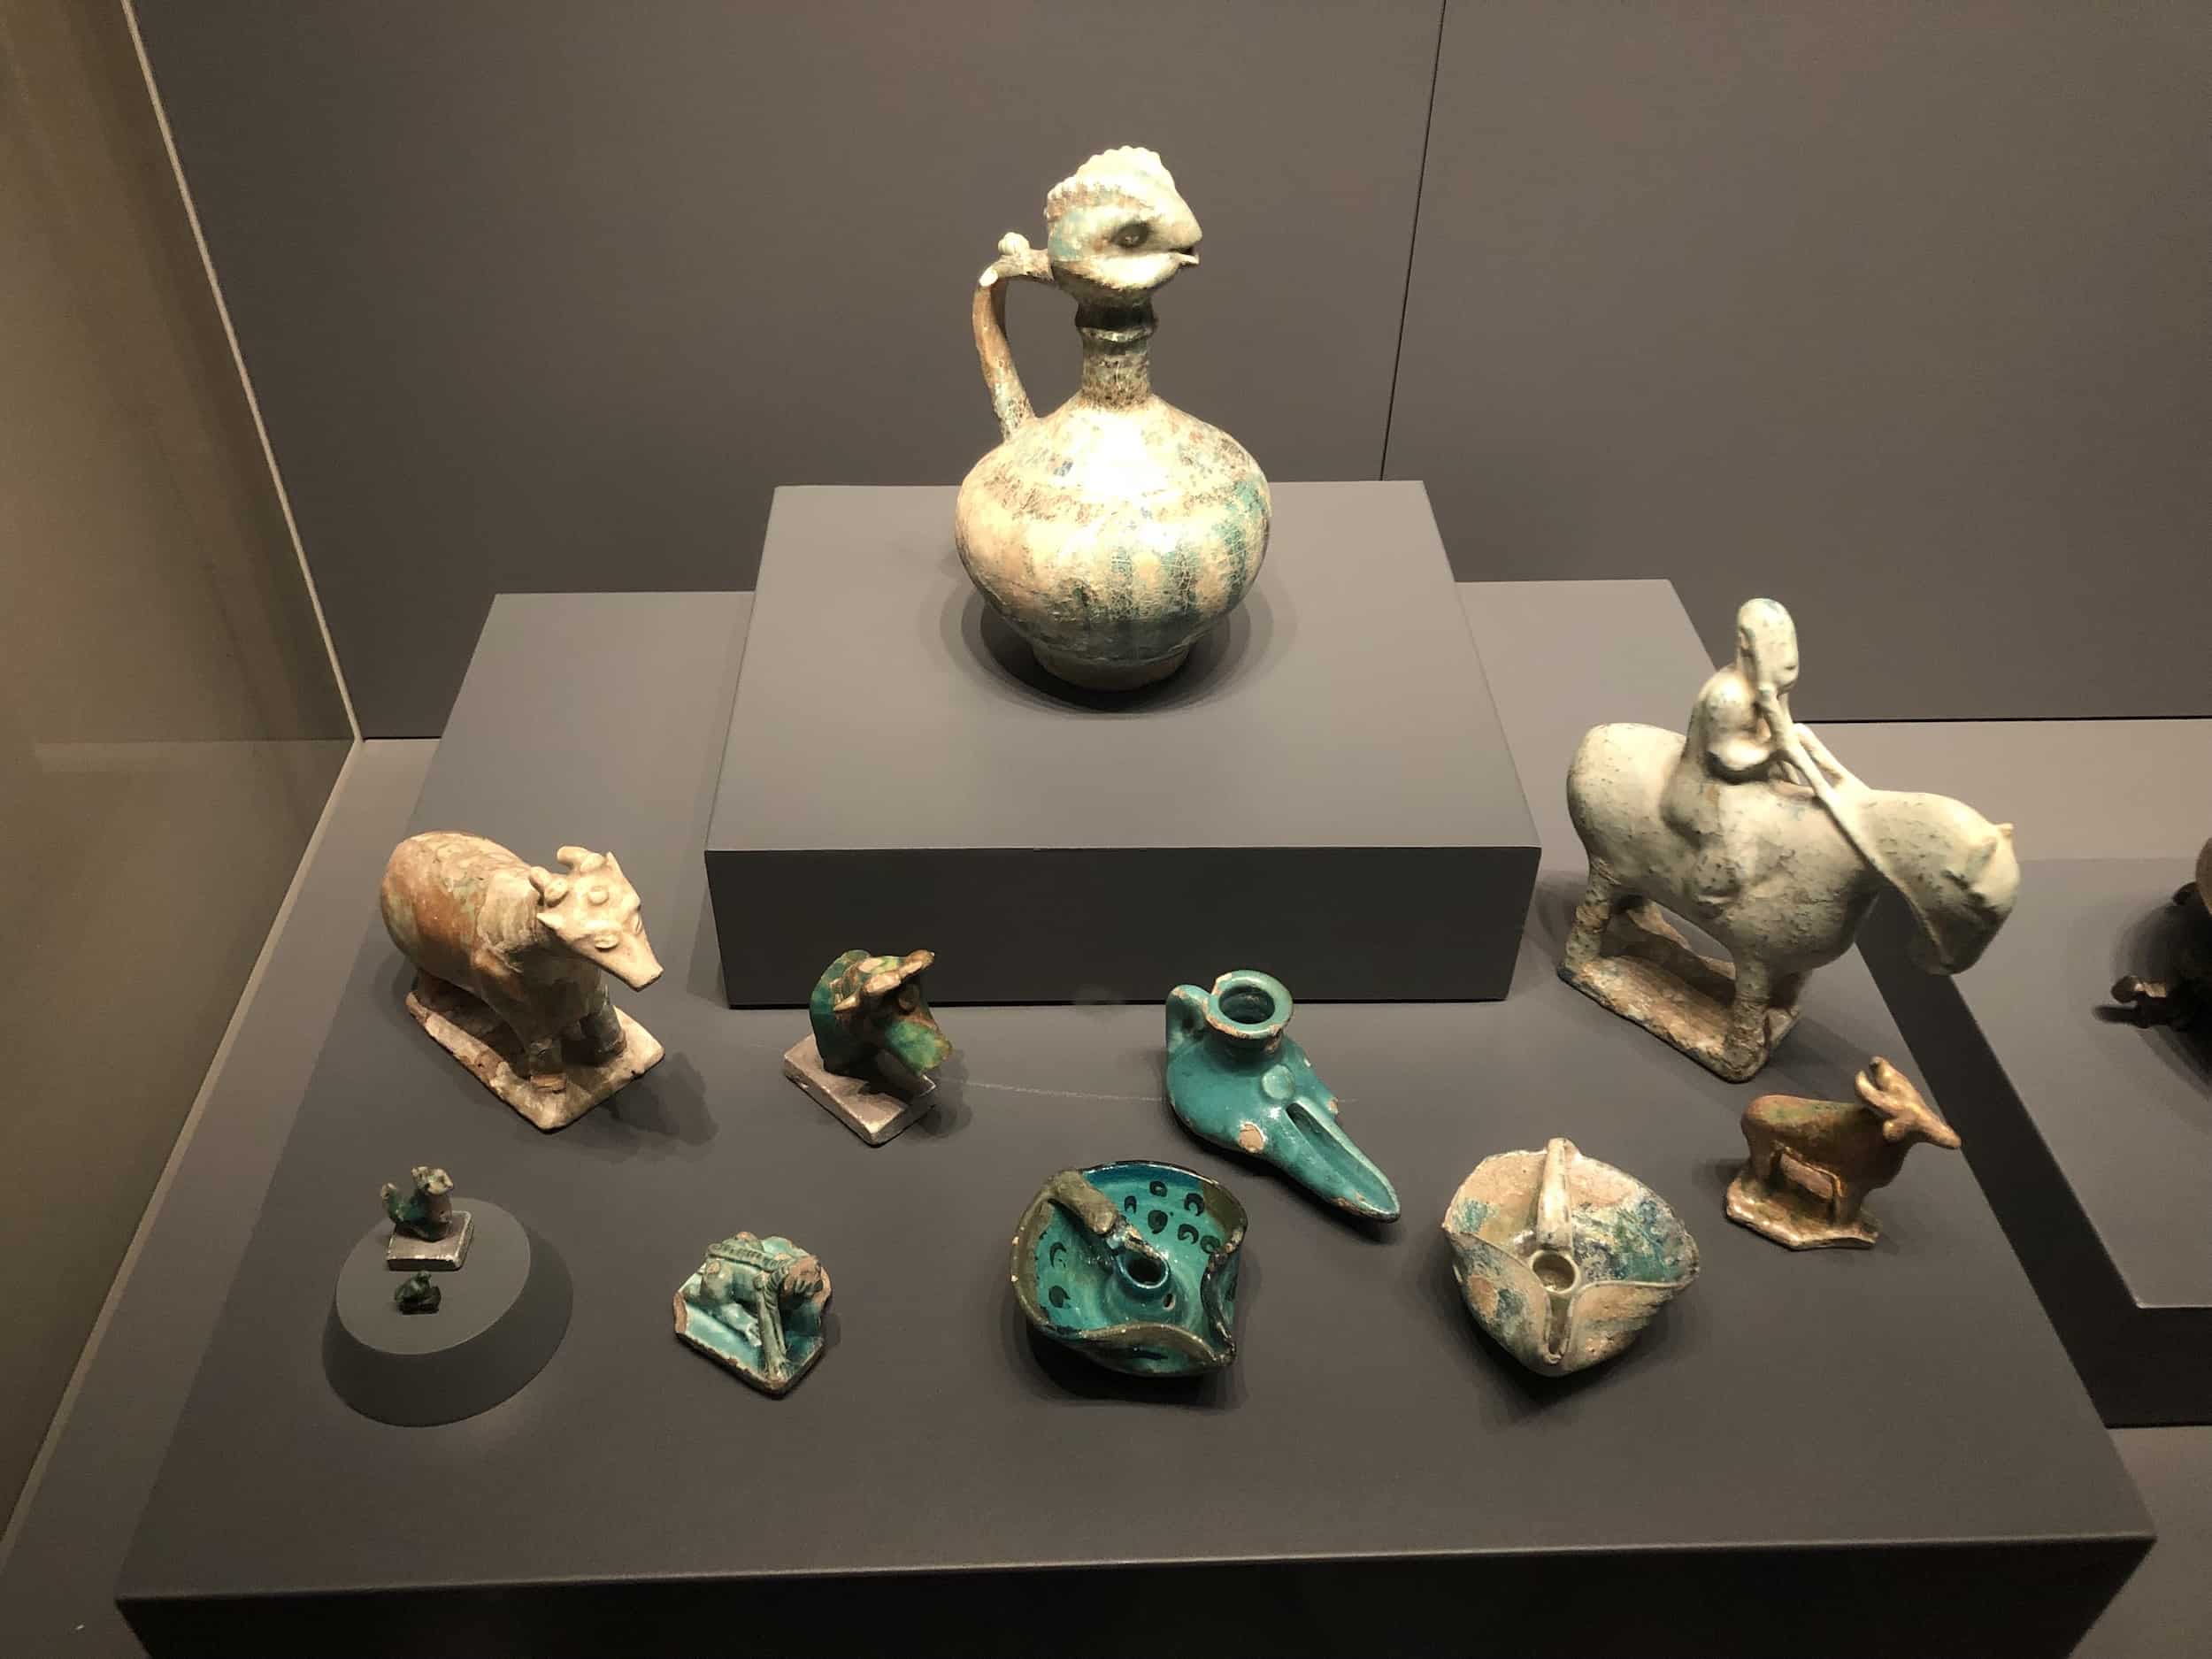 Ceramics from the Great Seljuk period